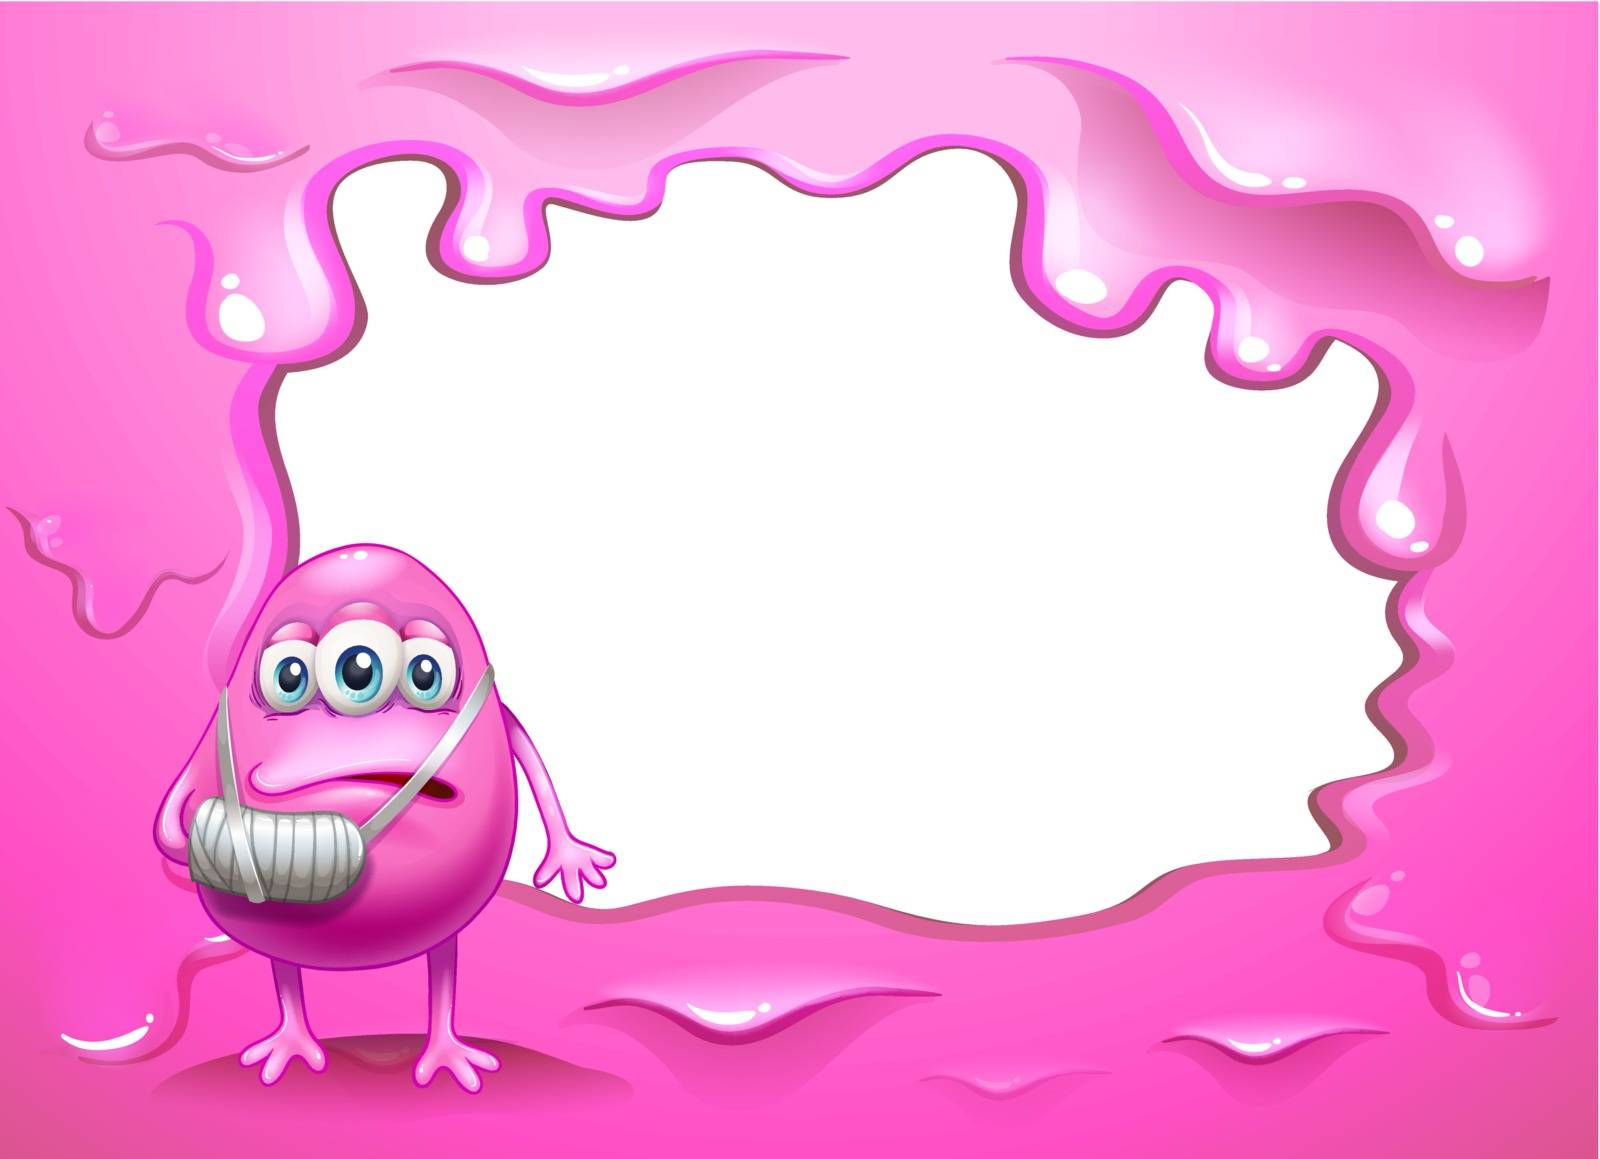 Illustration of a pink border design with an injured pink monster